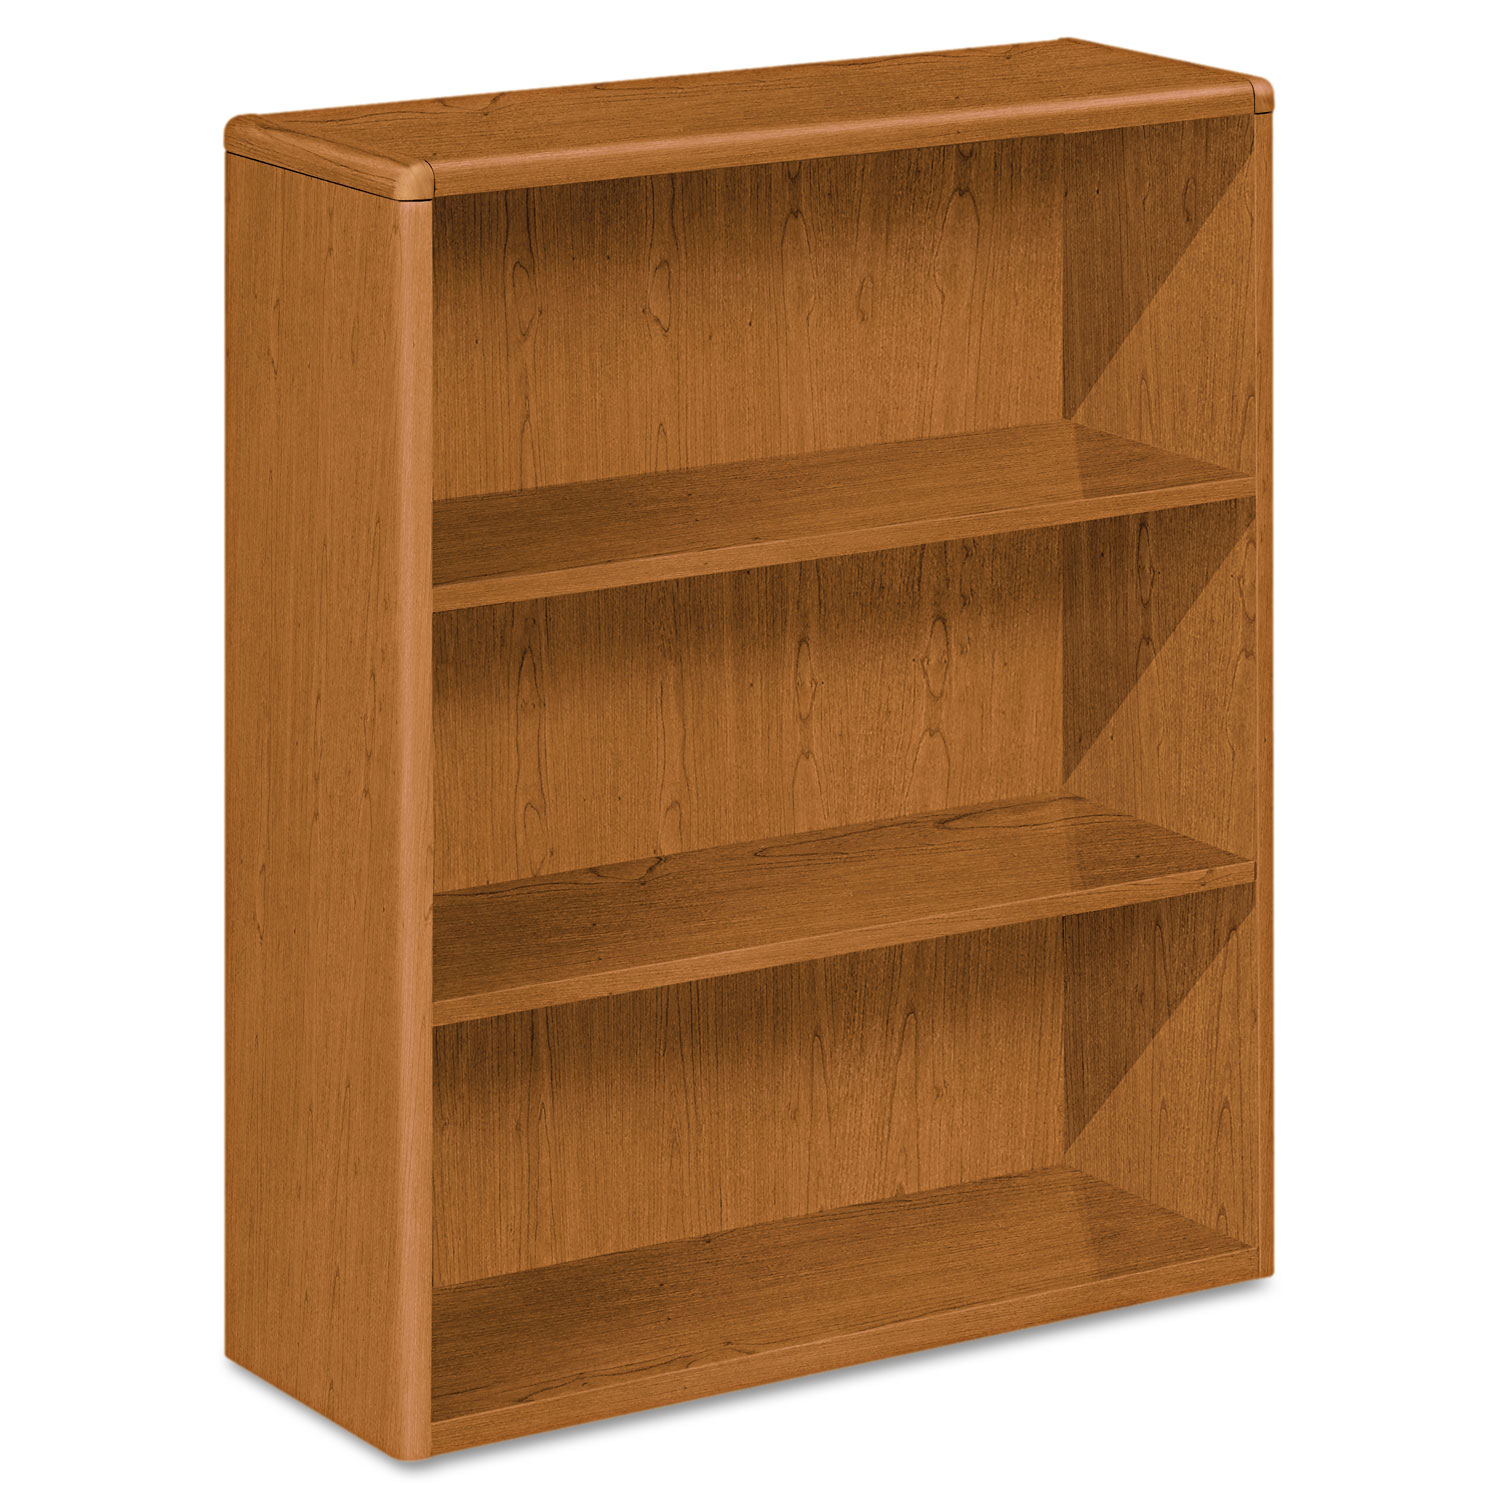  HON H10753.HH 10700 Series Wood Bookcase, Three Shelf, 36w x 13 1/8d x 43 3/8h, Bourbon Cherry (HON10753HH) 